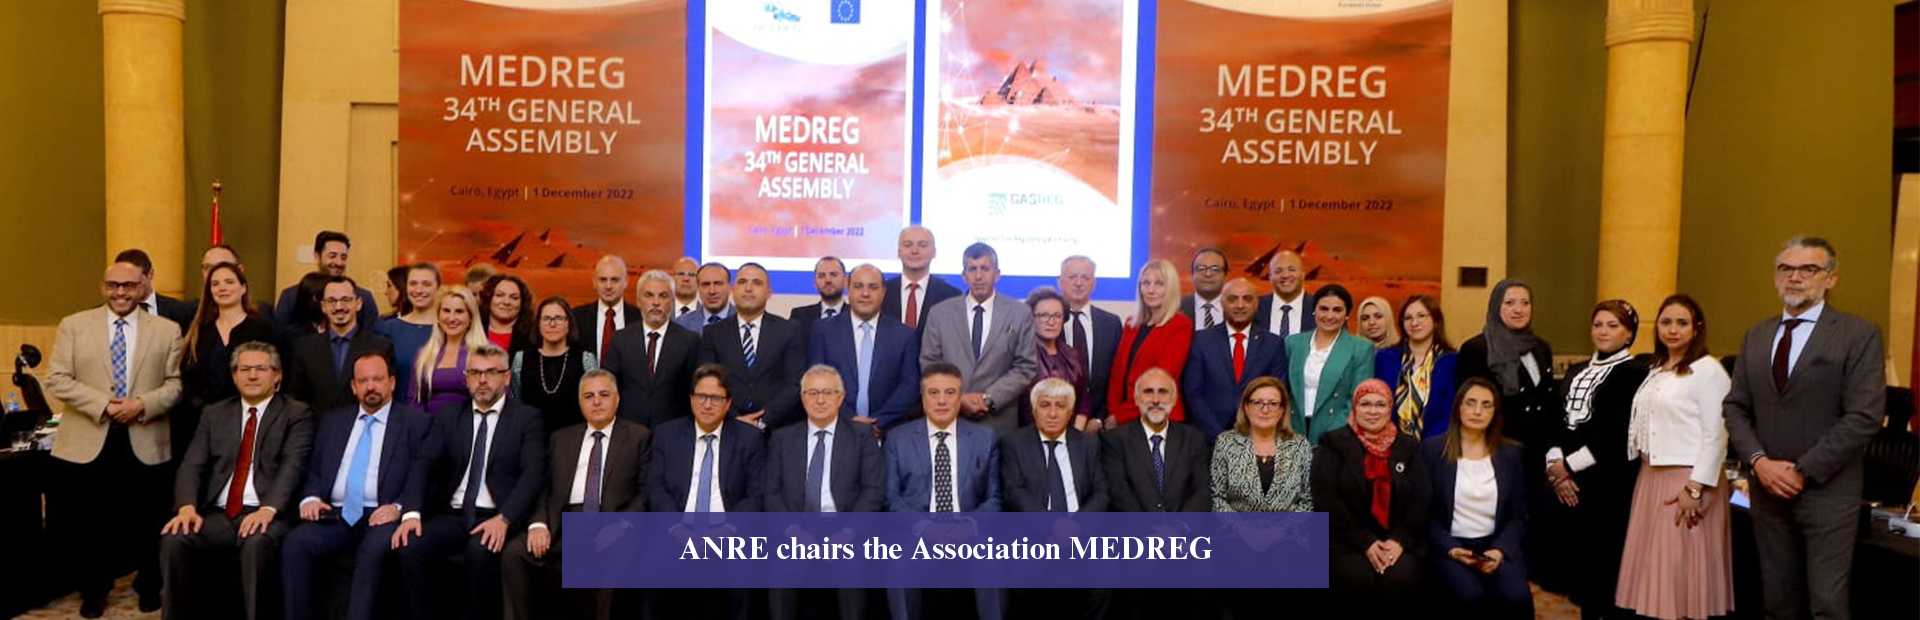 ANRE chairs the MEDREG Association